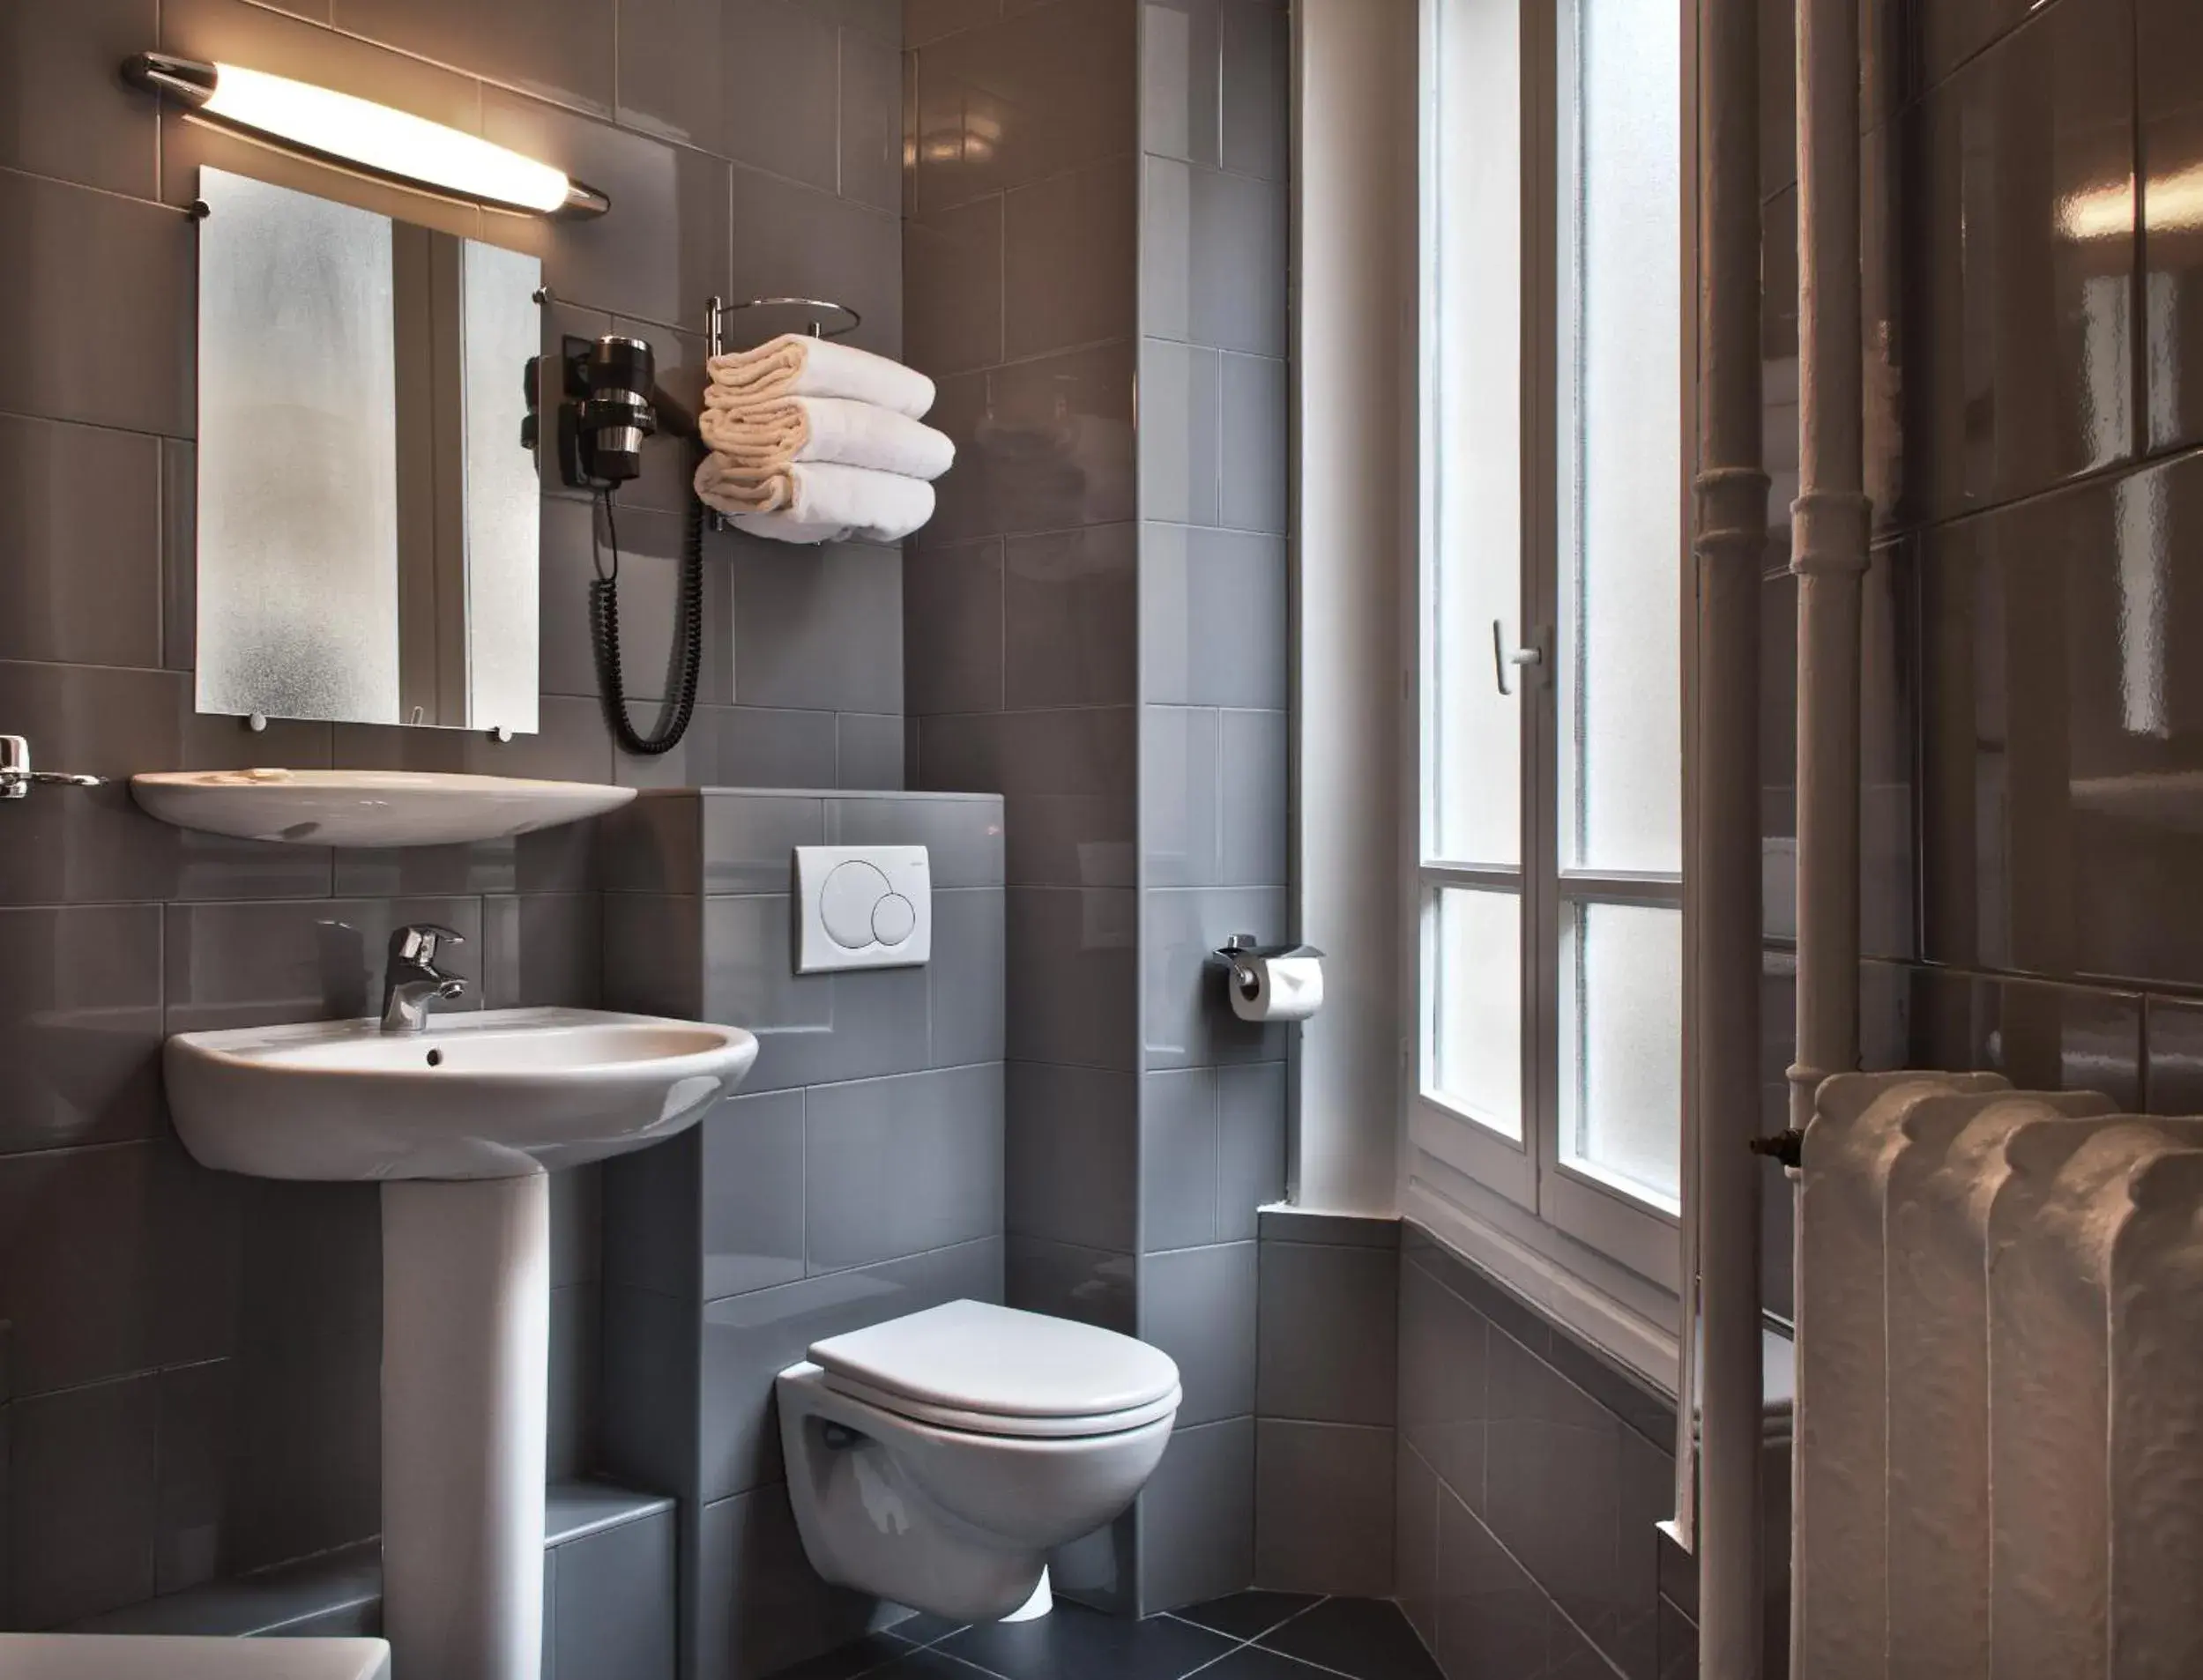 Bathroom in Paris France Hotel